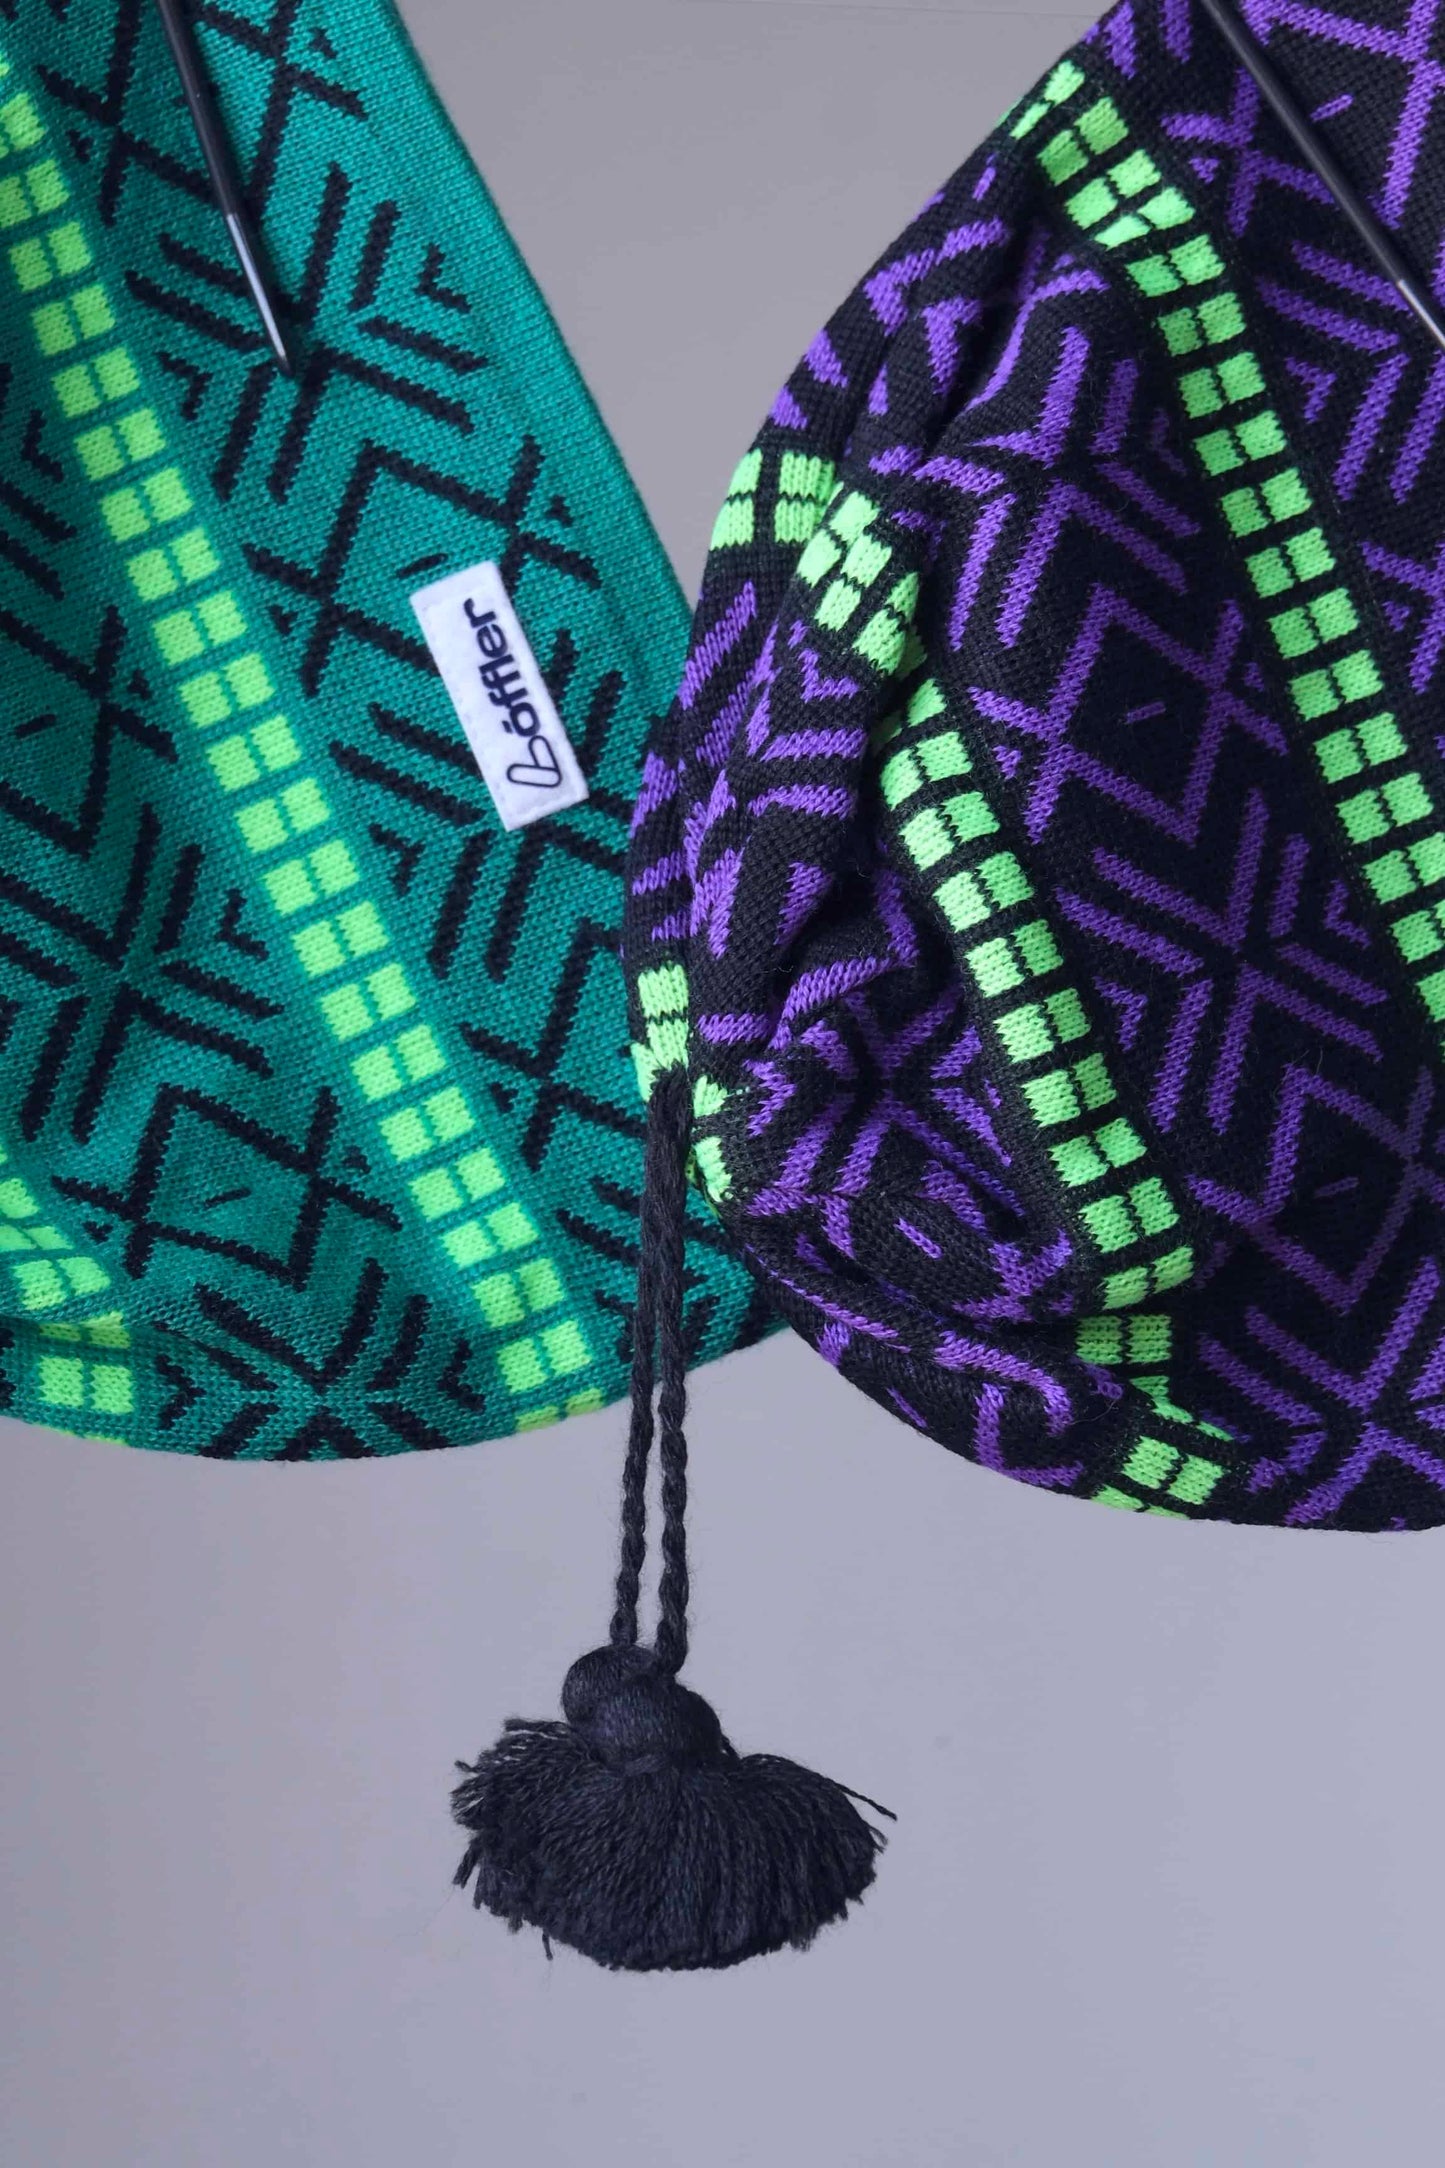 LÖFFLER 90's Jacquard Beanie green and black/purple close up